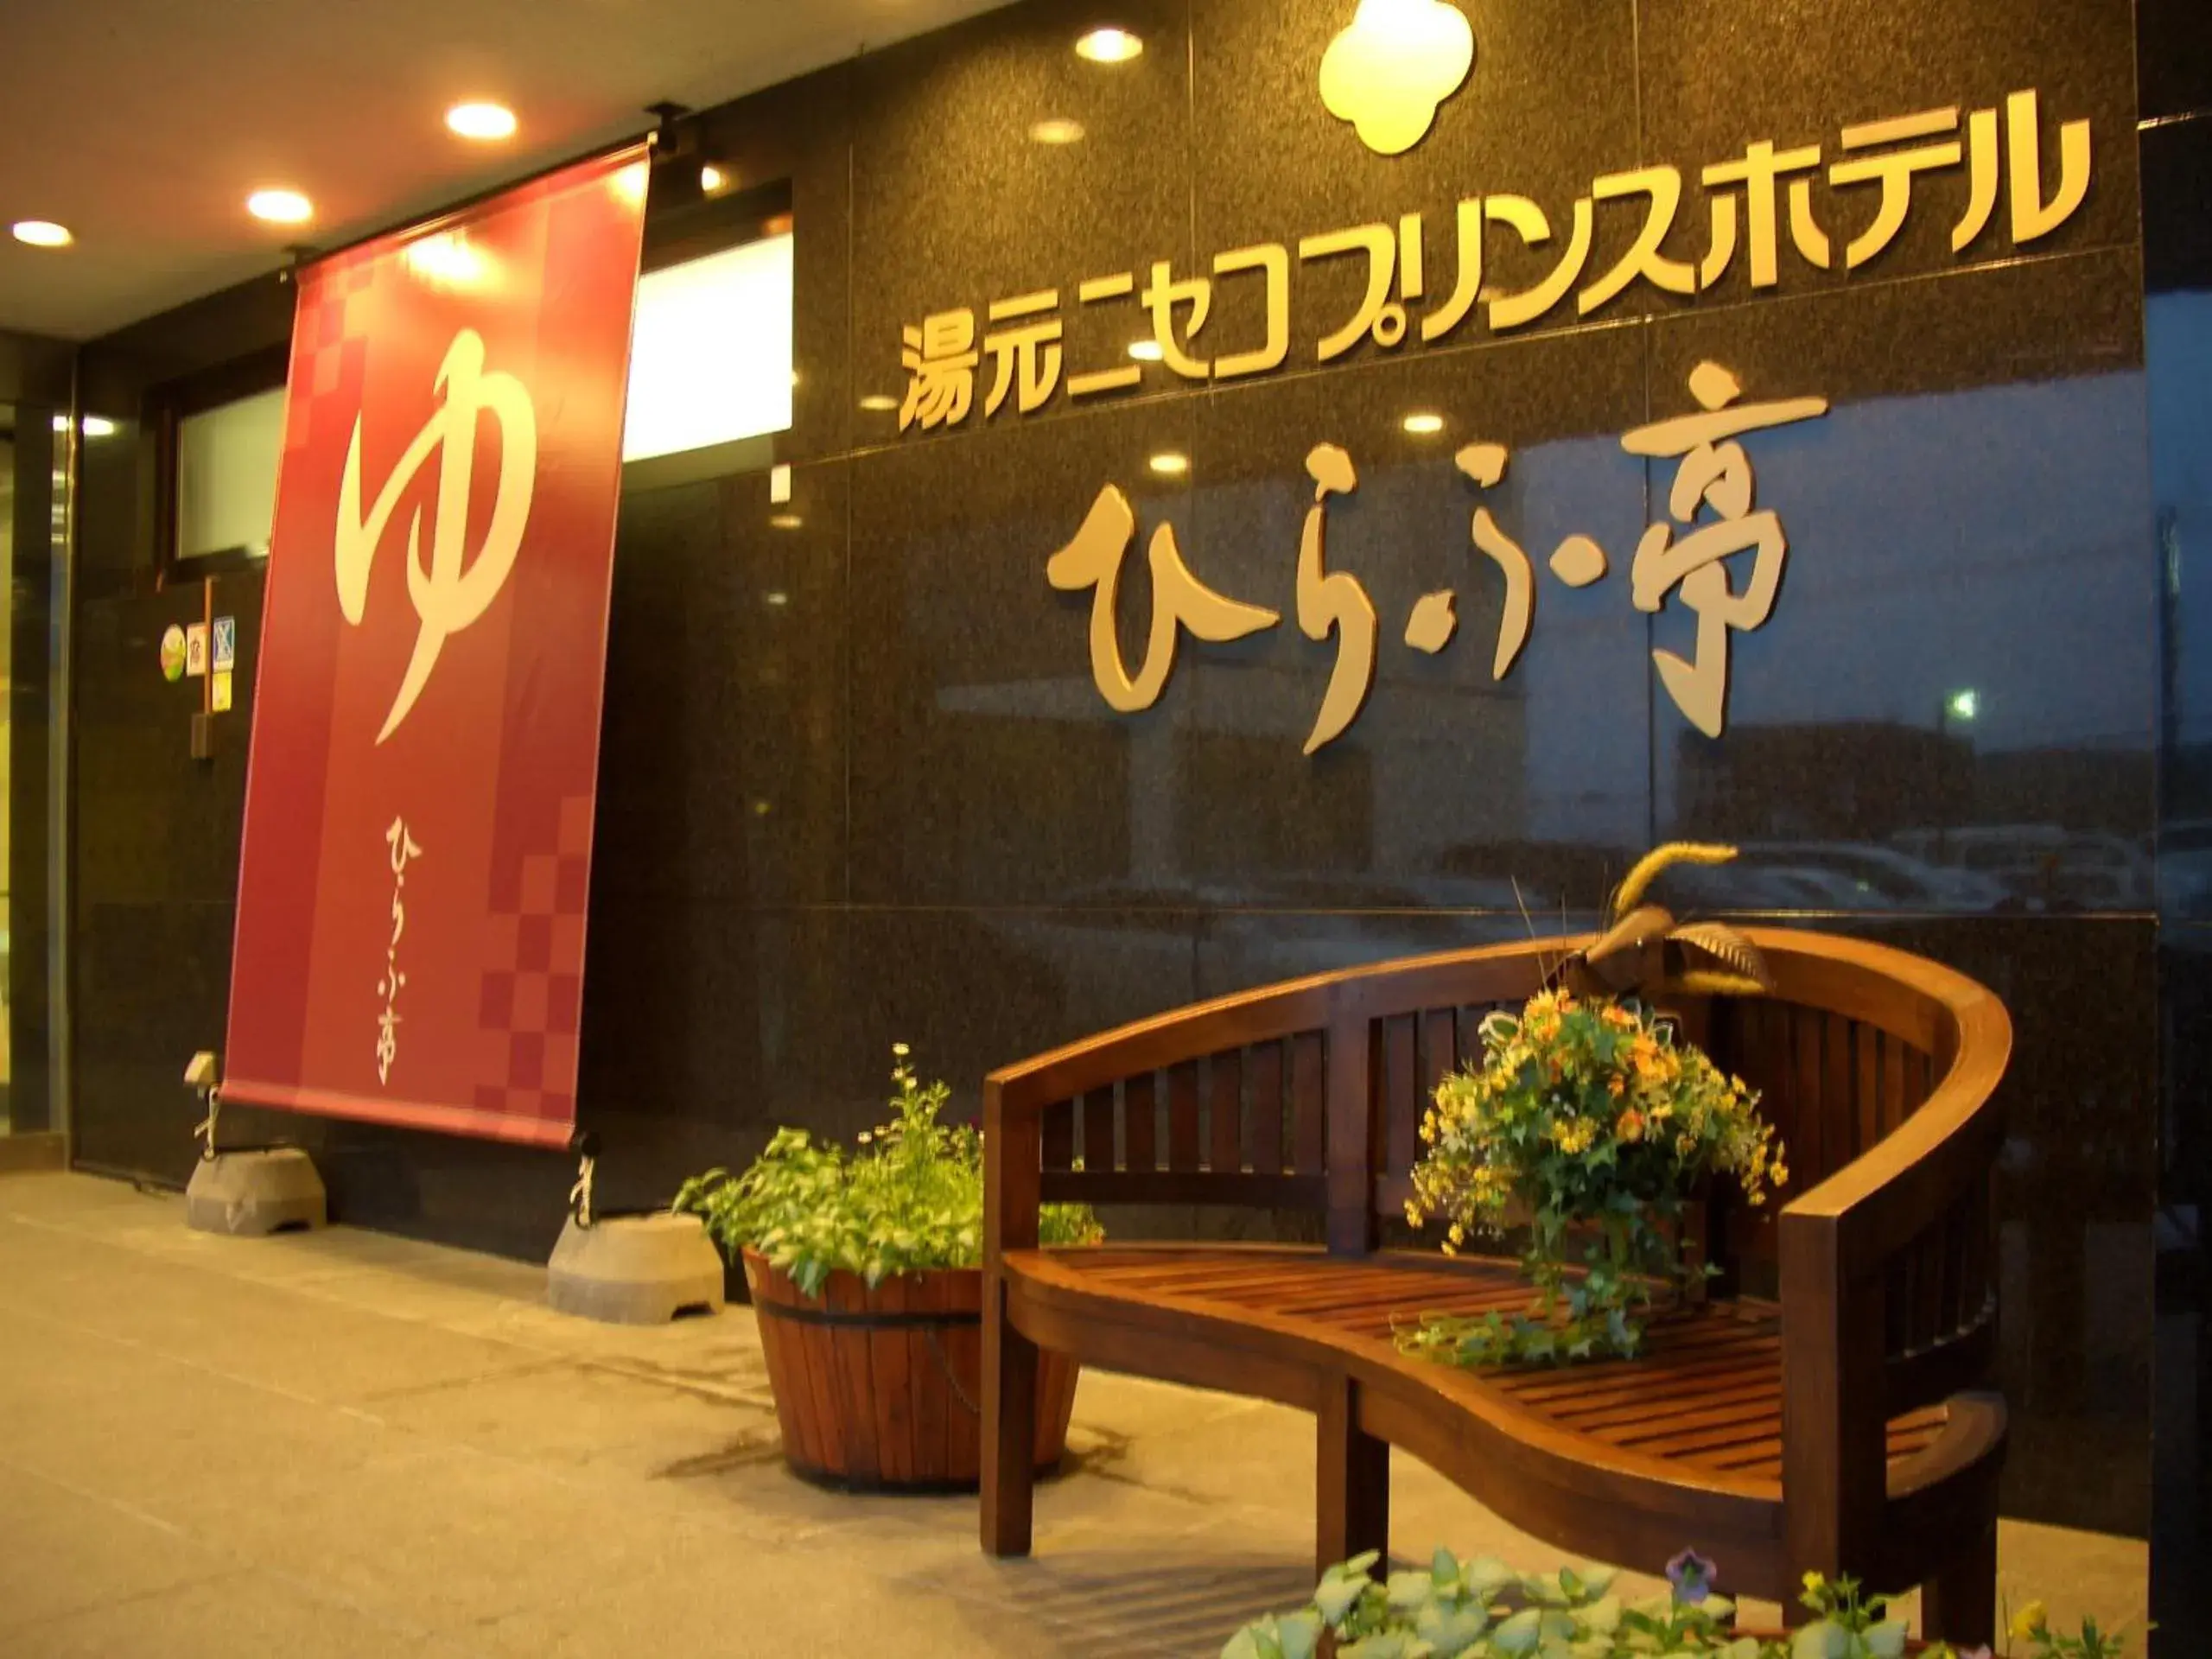 Property logo or sign in Niseko Prince Hotel Hirafutei